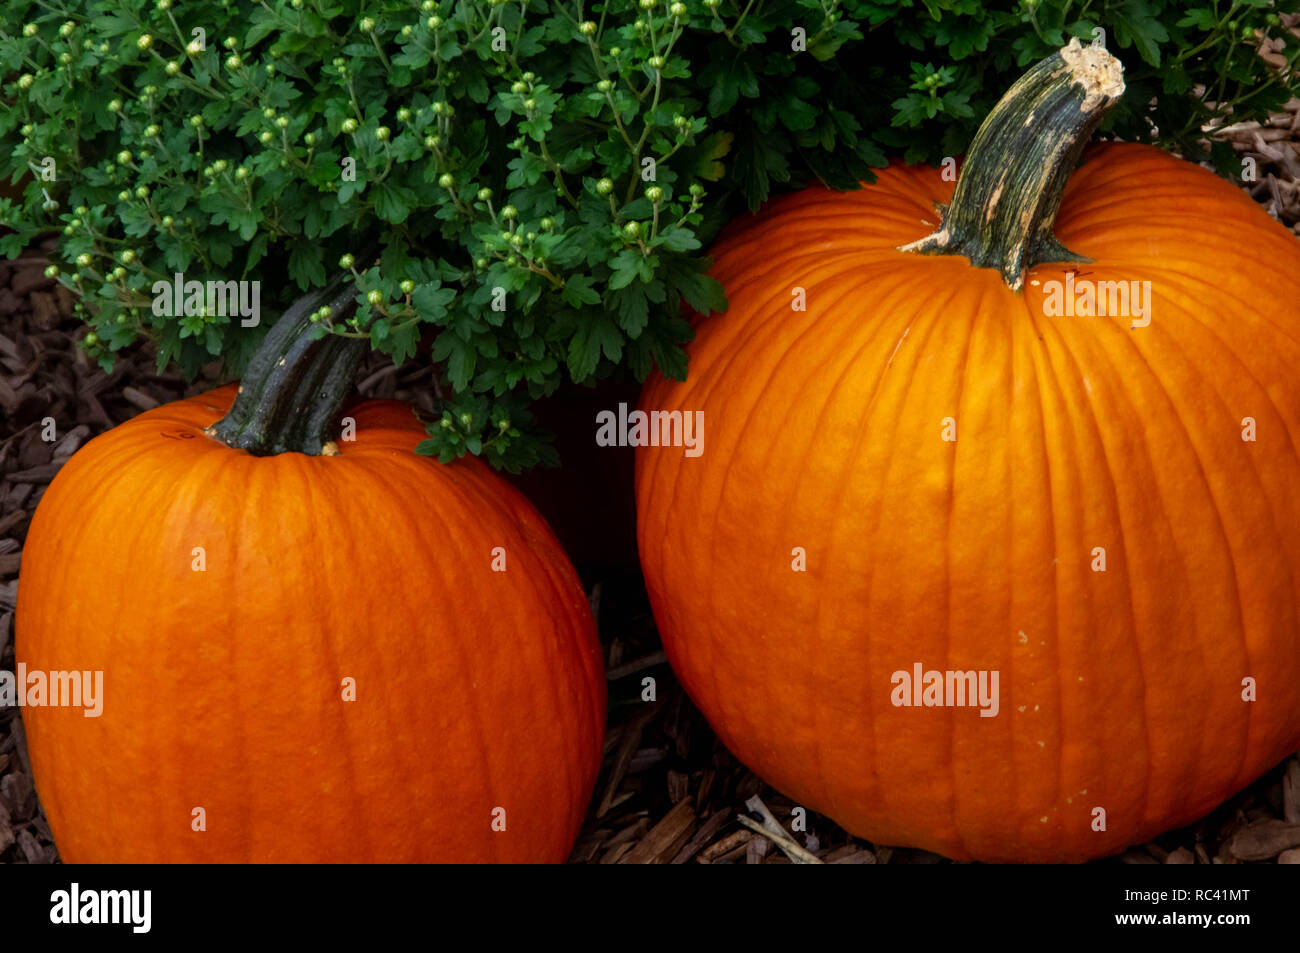 Two orange round pumpkins sitting among mums on the ground Stock Photo